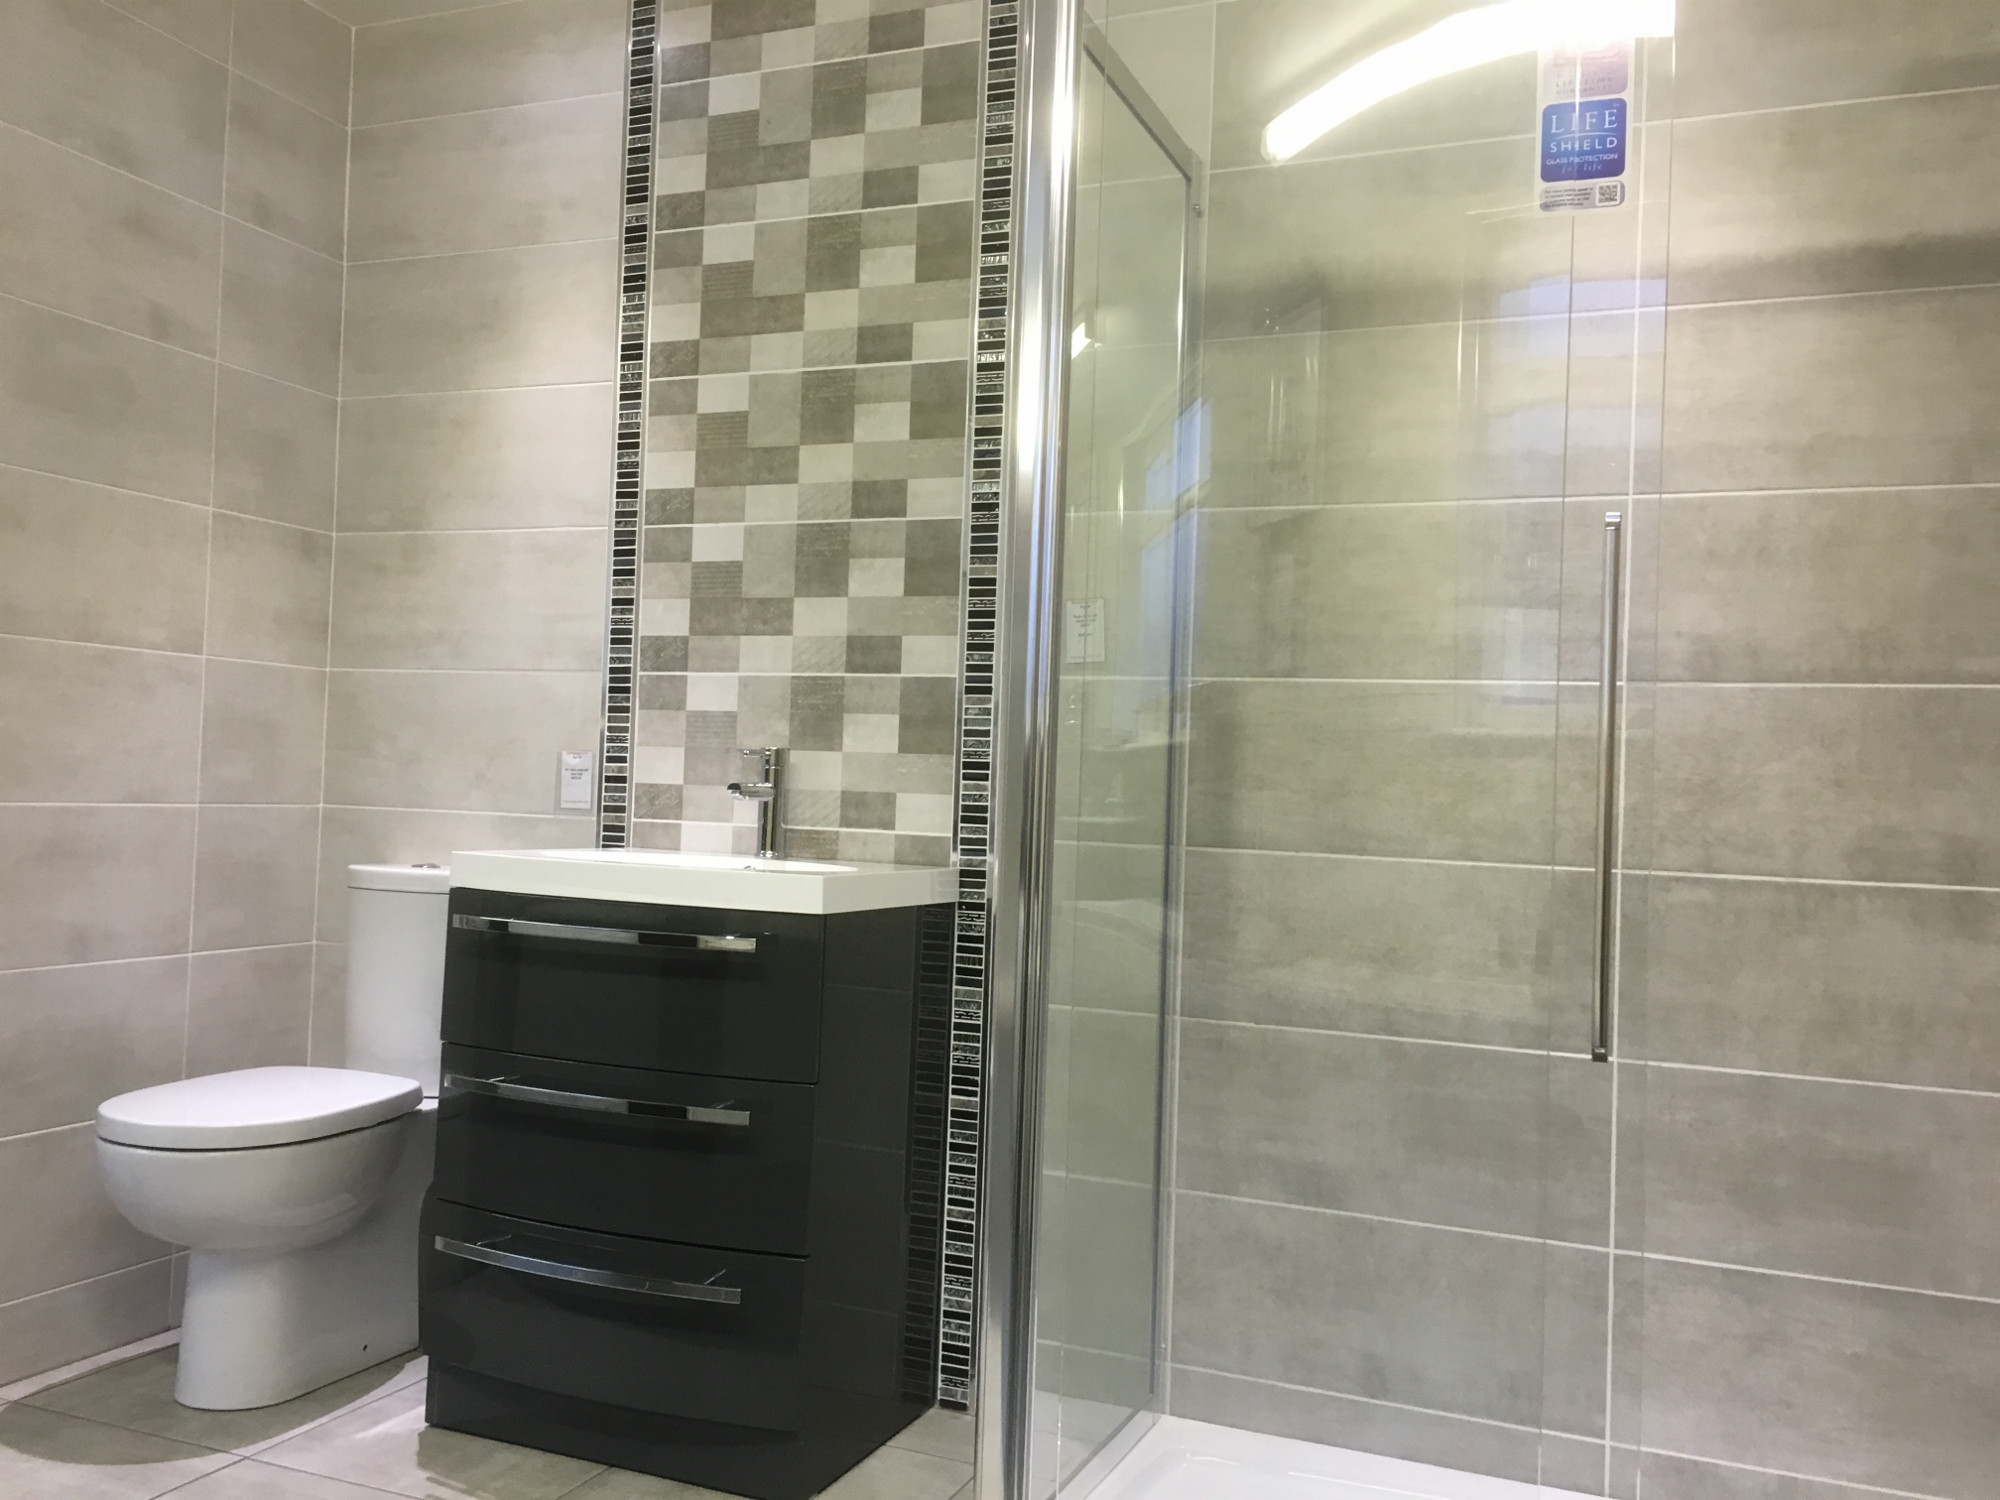 Bathroom Tile Wall
 Gloss or Matt Bathroom Wall Tiles Tiles 2 Go Ltd